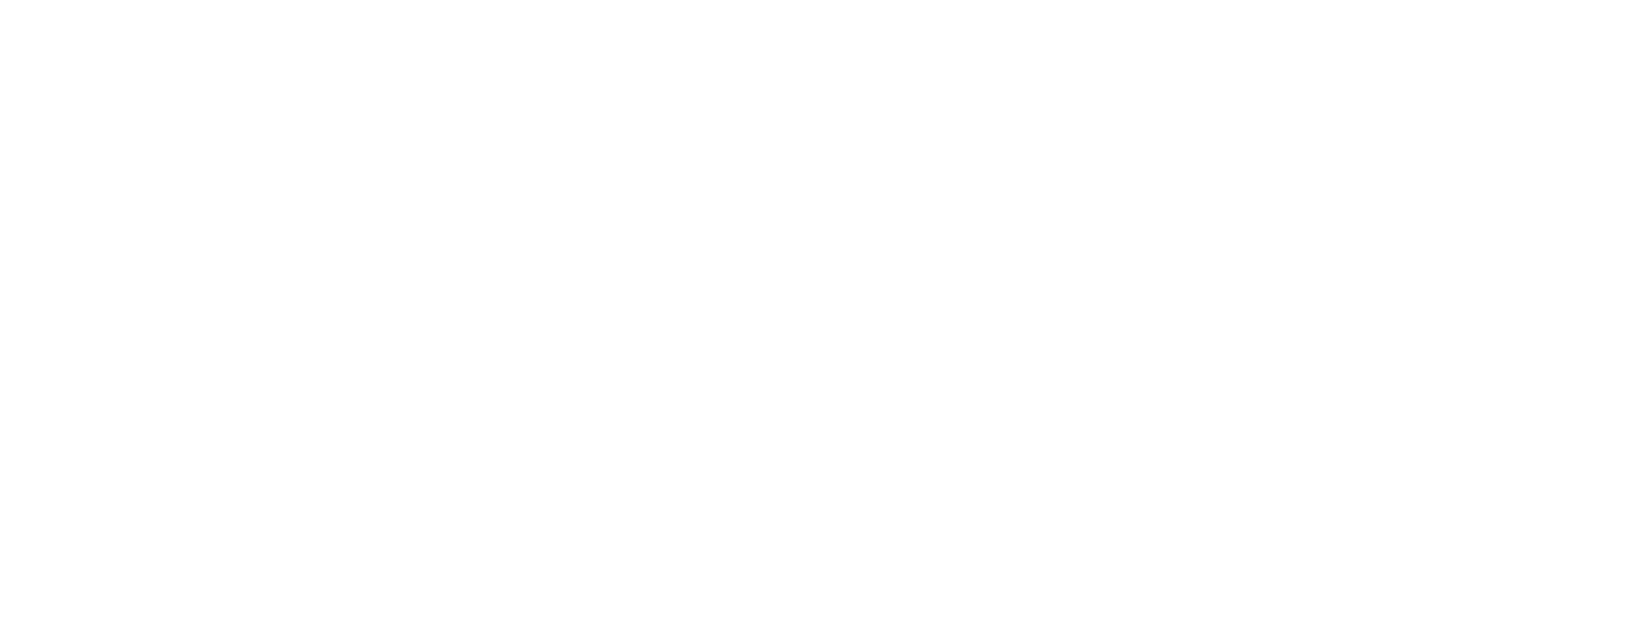 Electric Family logo